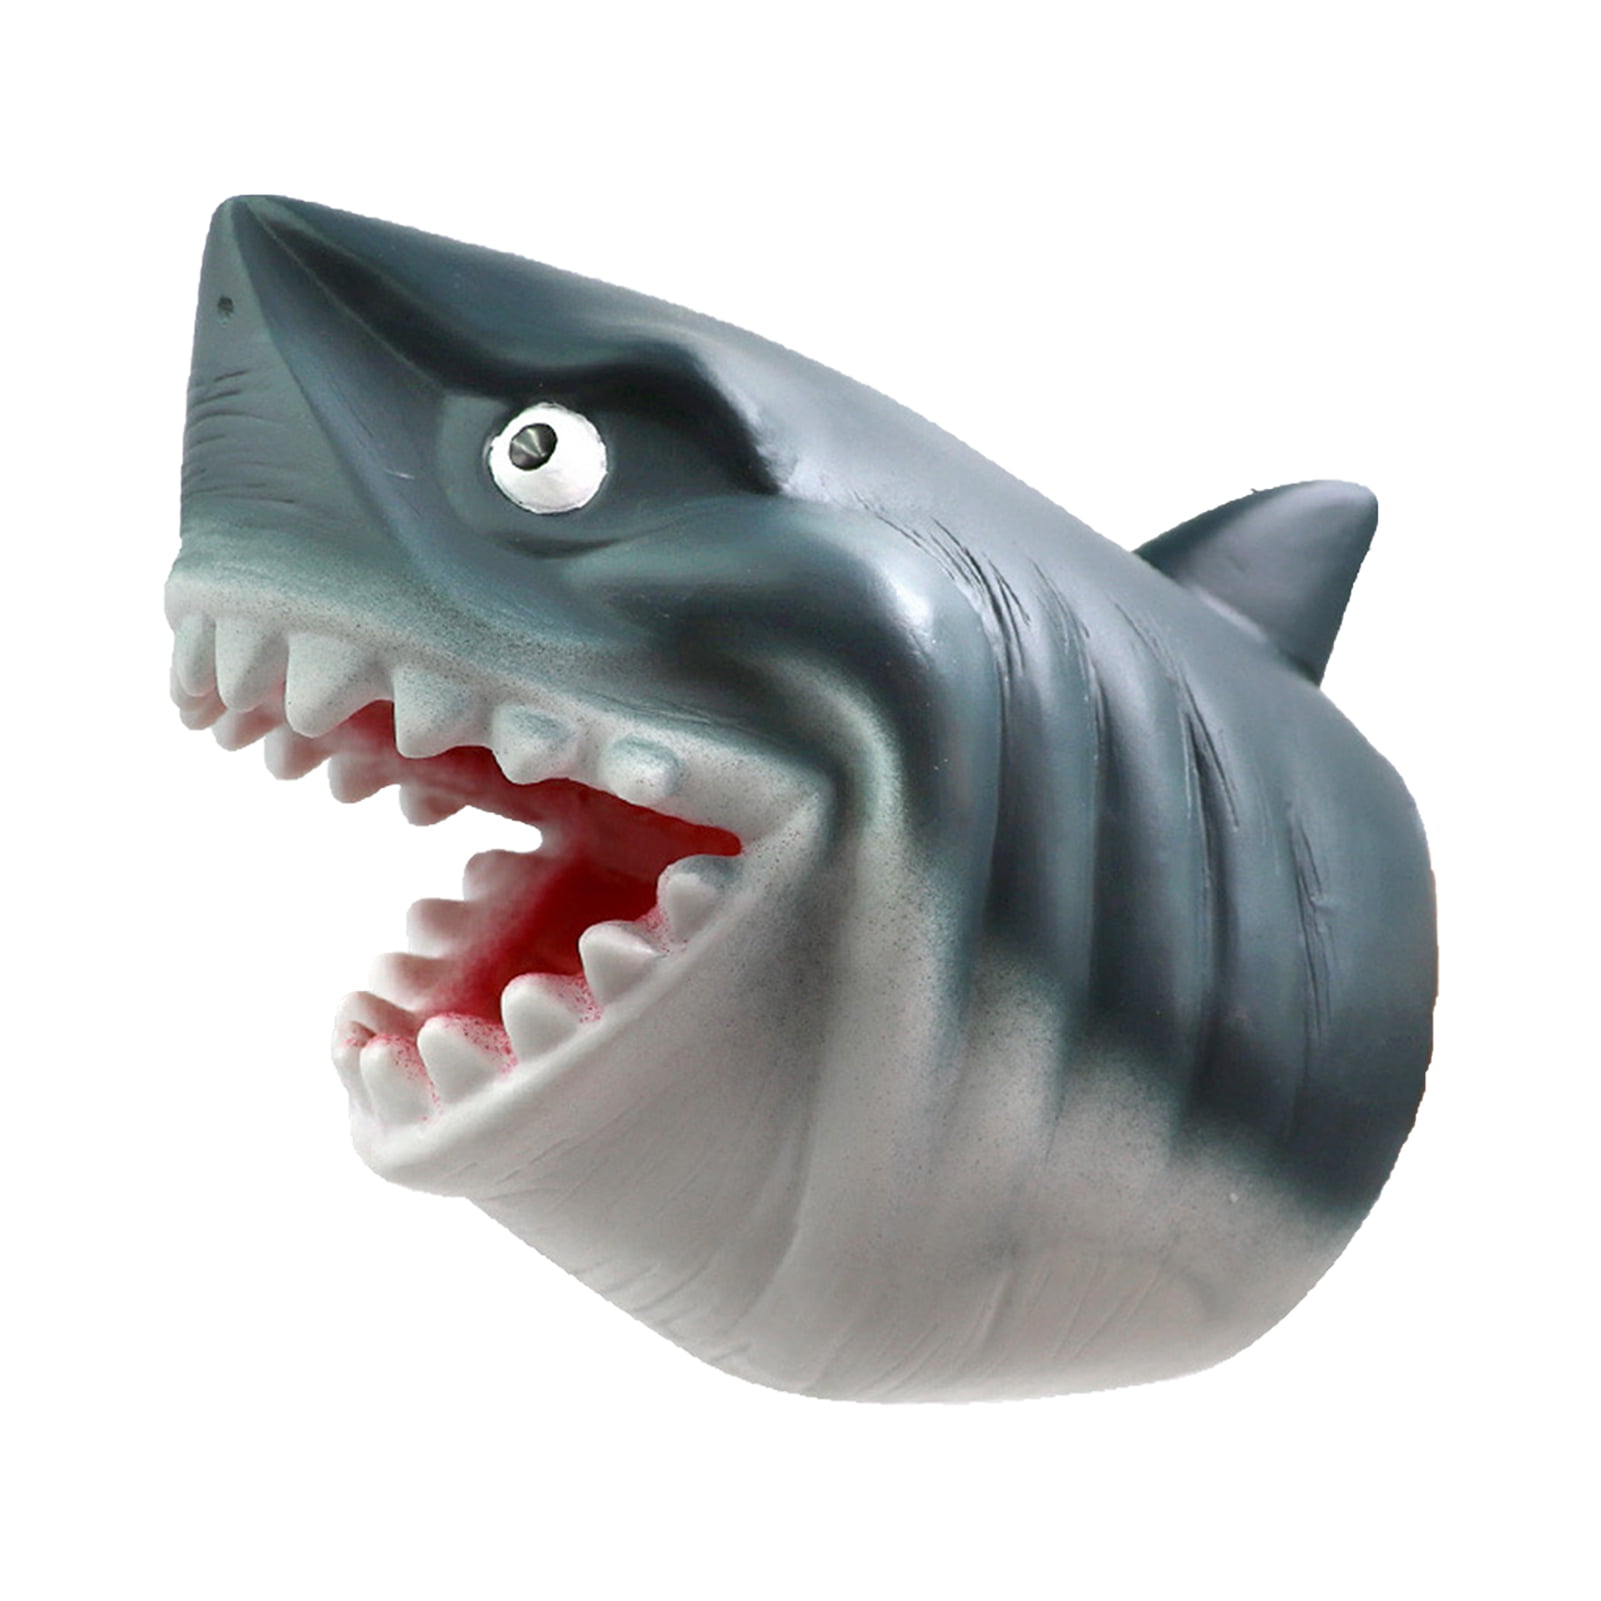 Realistic Shark Dinosaur Hand Puppet Soft Plastic Mouth Deformation Children Toy 